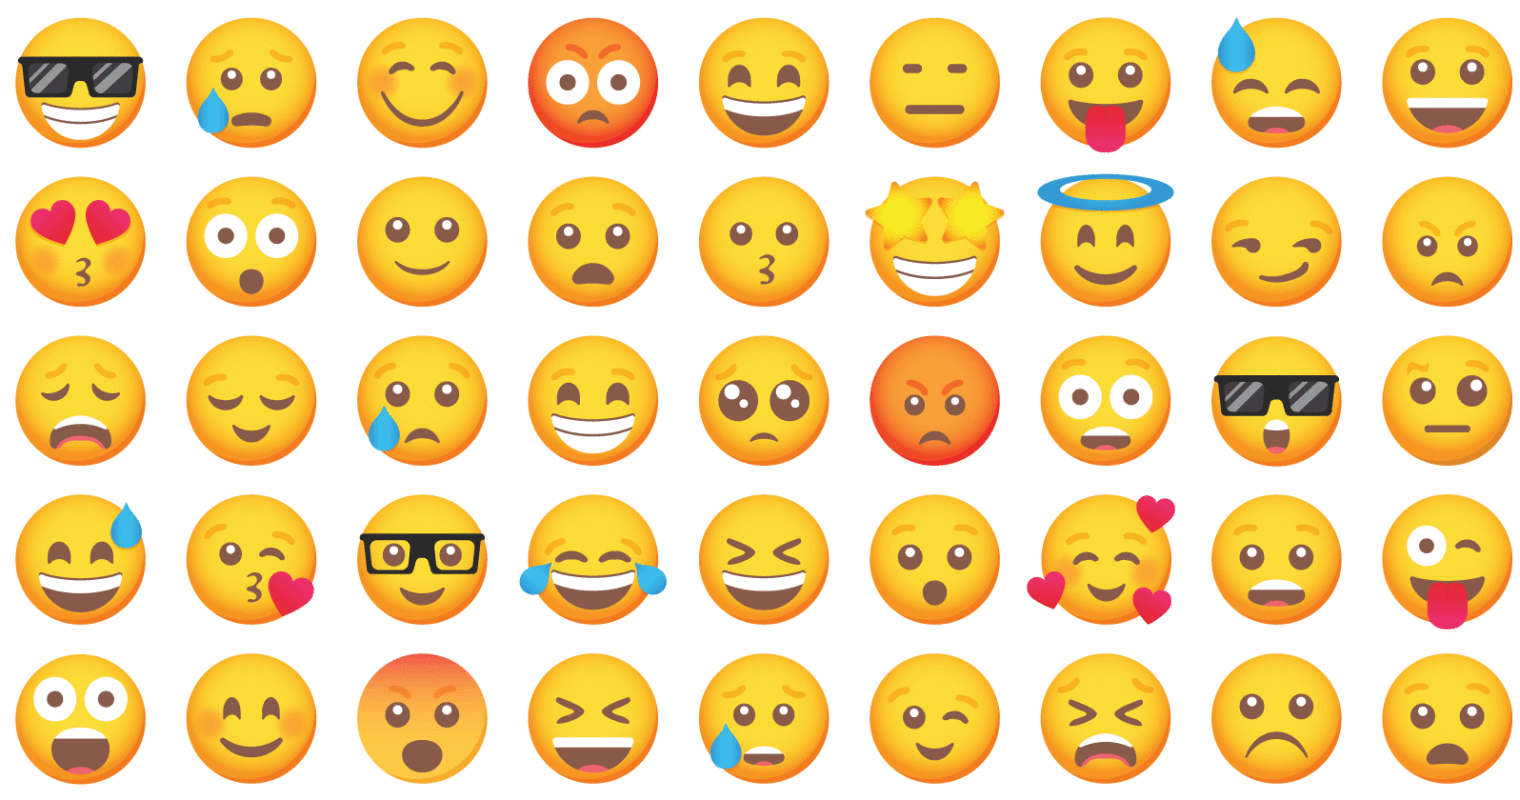 emoji-in-subject-lines-01-5f3fa1b665d64-1520x800.gif